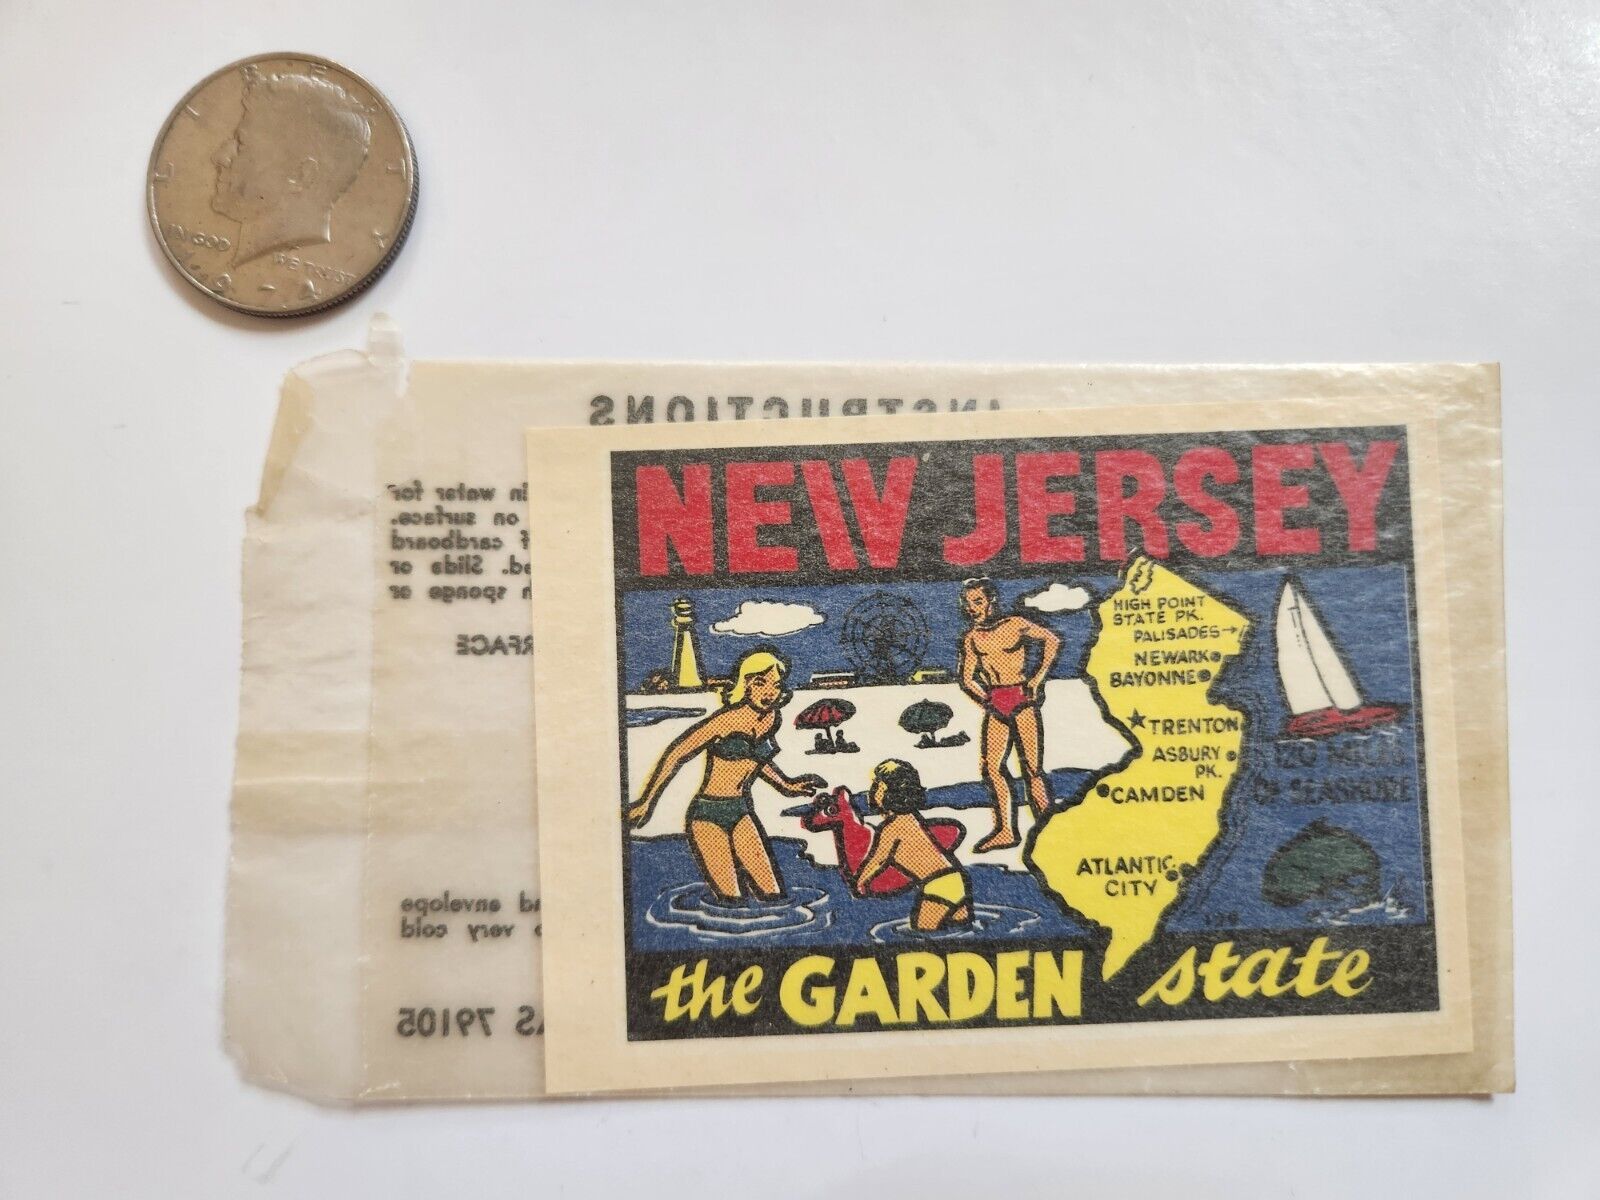 Baxter Lane Vintage New Jersey Style Travel Decal /Vinyl Sticker Luggage Label